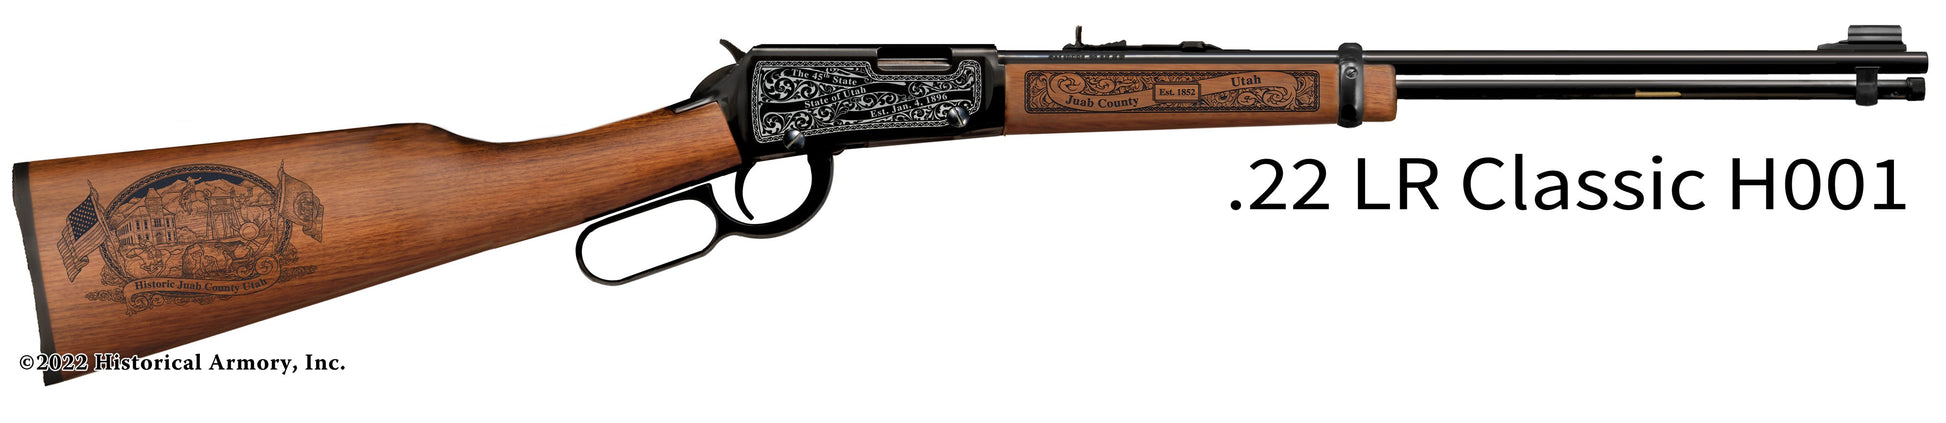 Juab County Utah Engraved Henry H001 Rifle